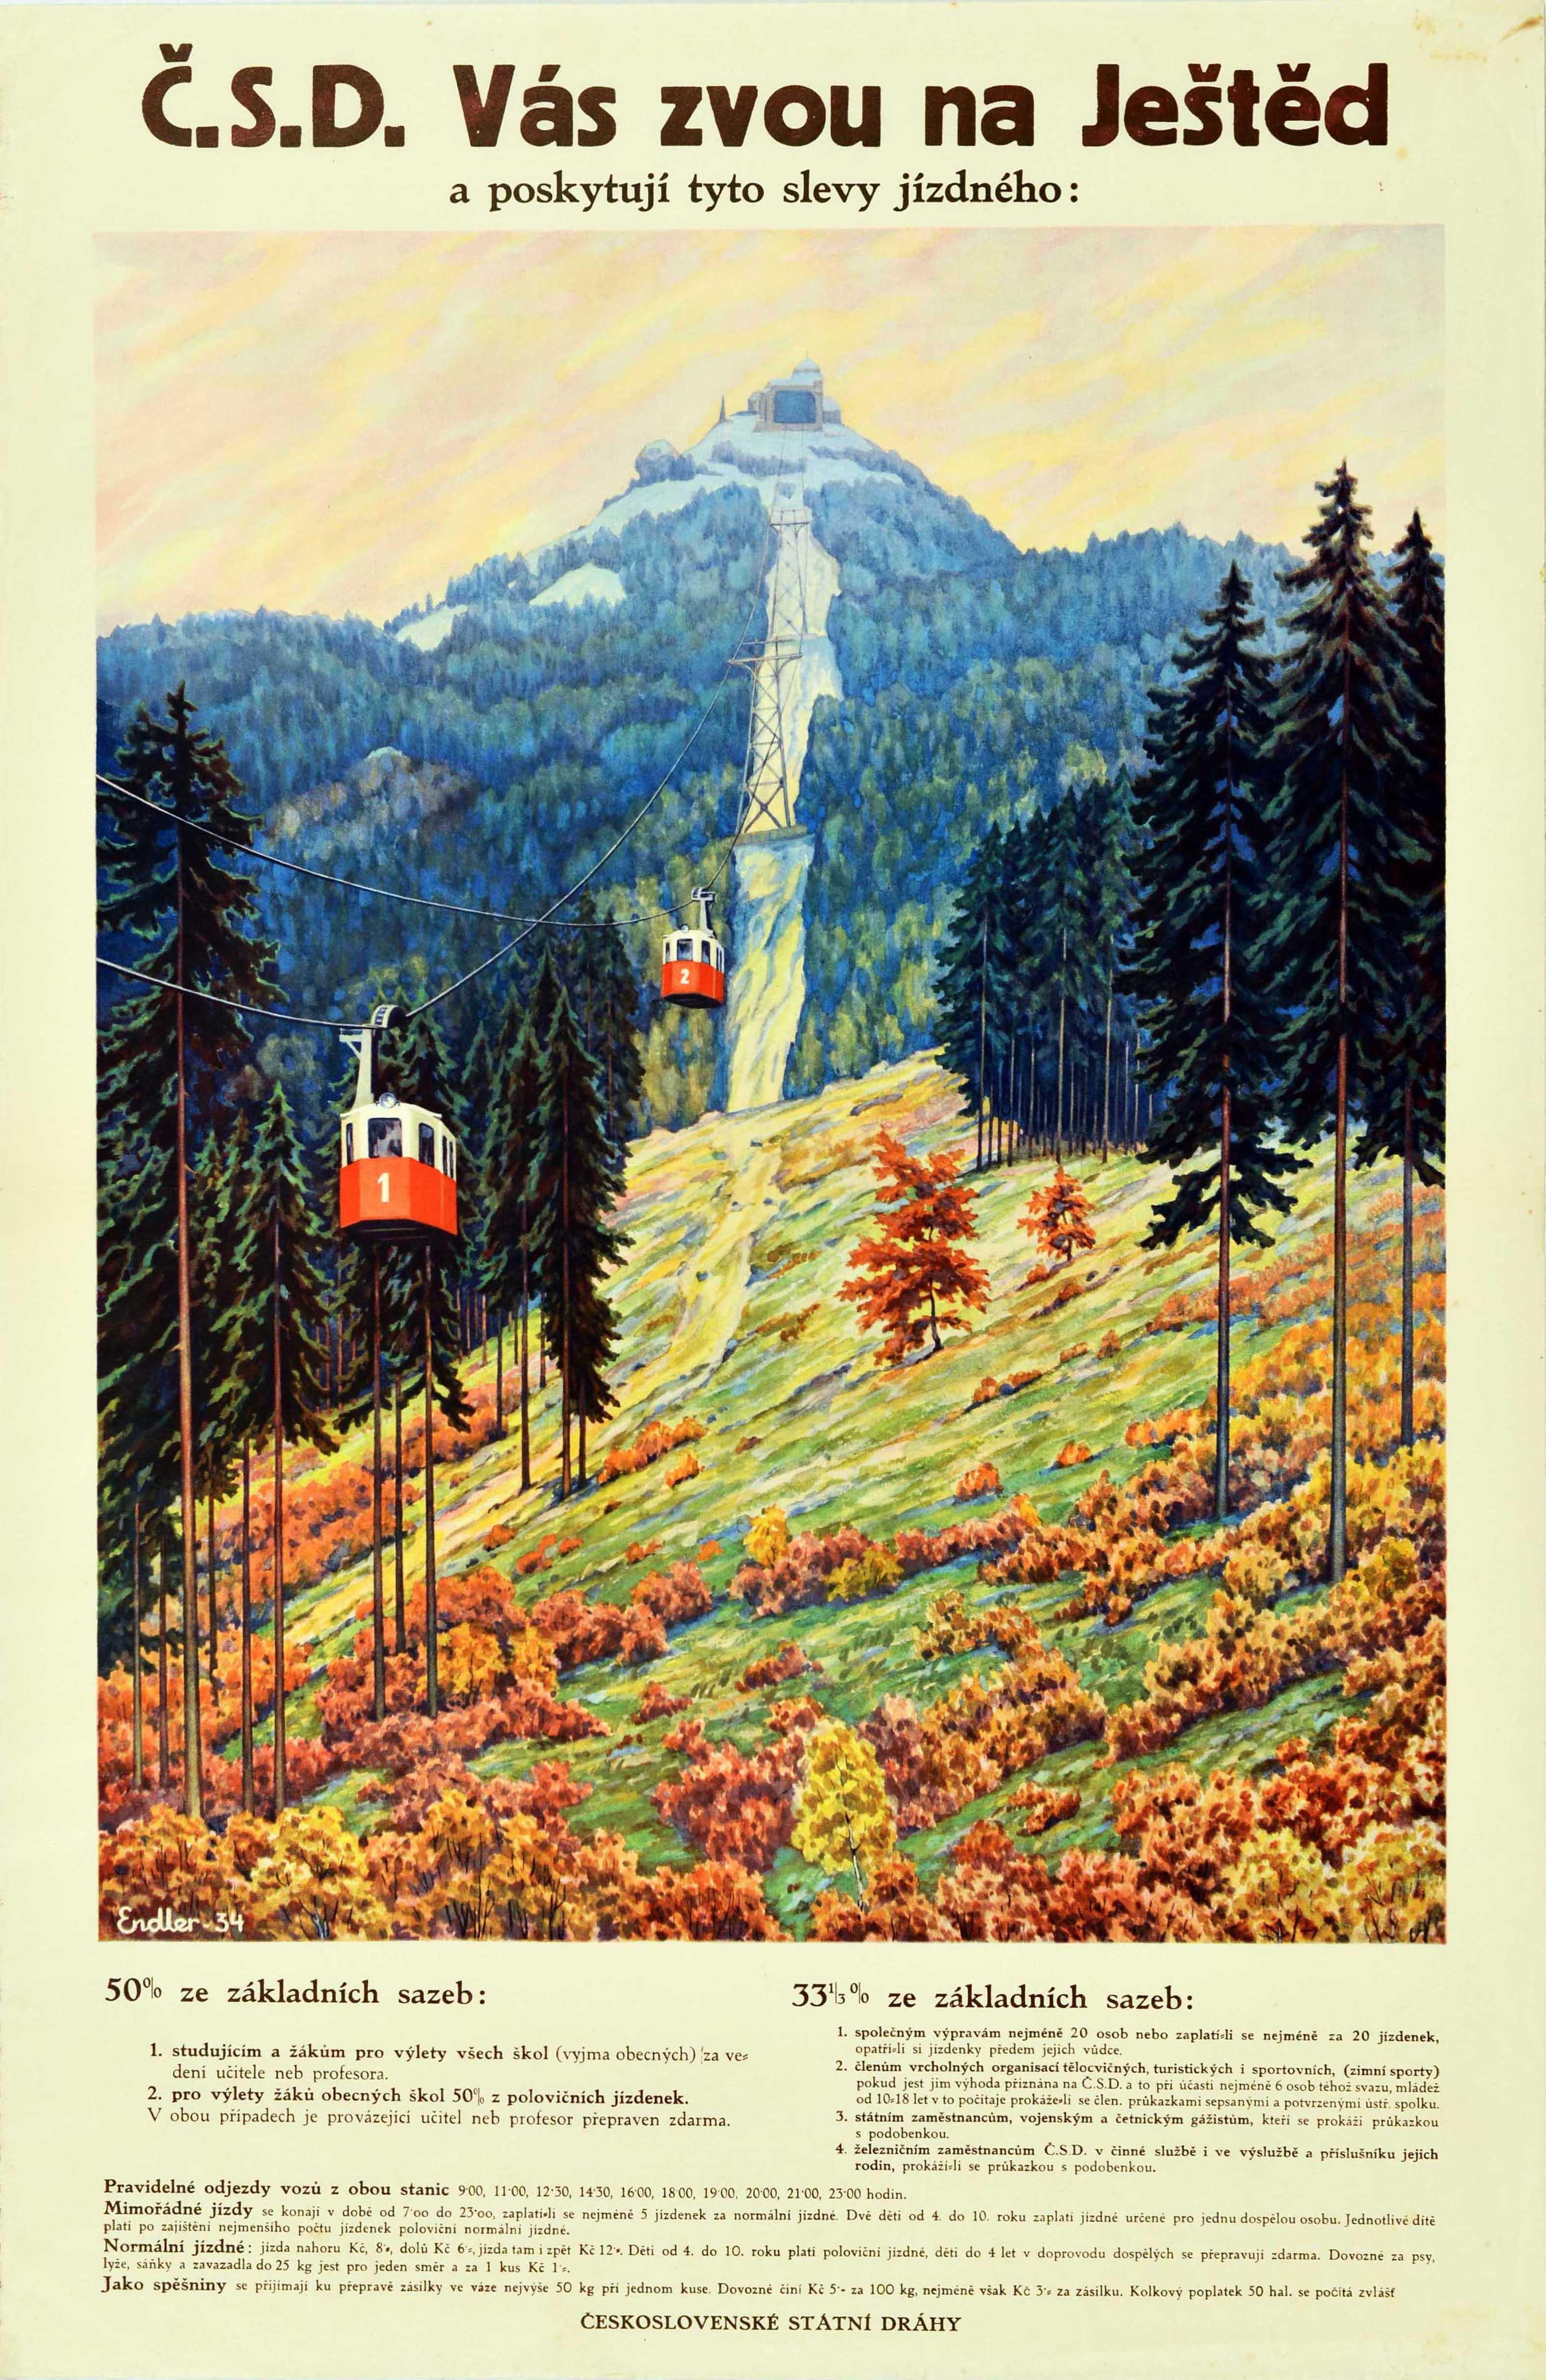 Unknown Print - Original Vintage Travel Poster Advertising CSD Czechoslovak State Railways Czech